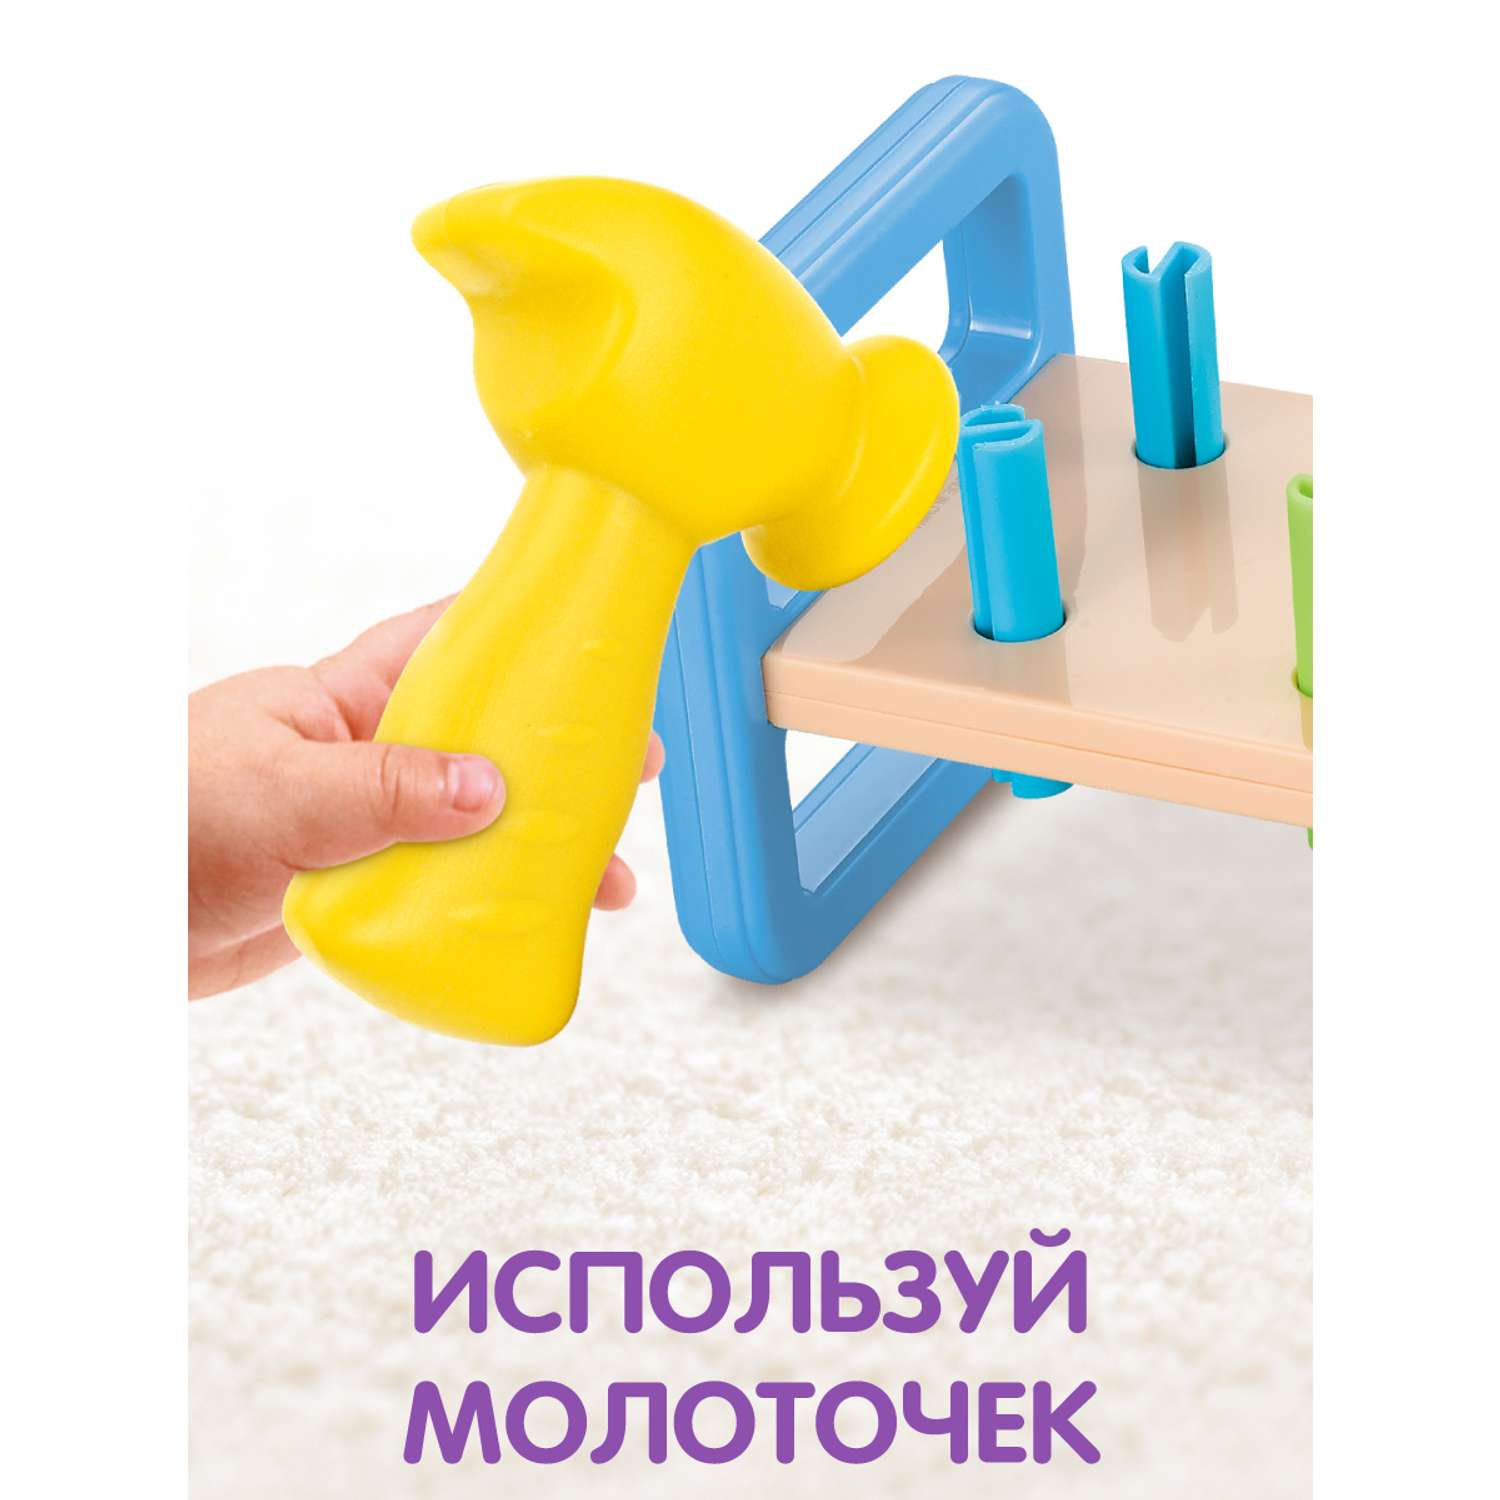 Стучалка Ути Пути молоток гвоздики игрушка развивающий столик - фото 2